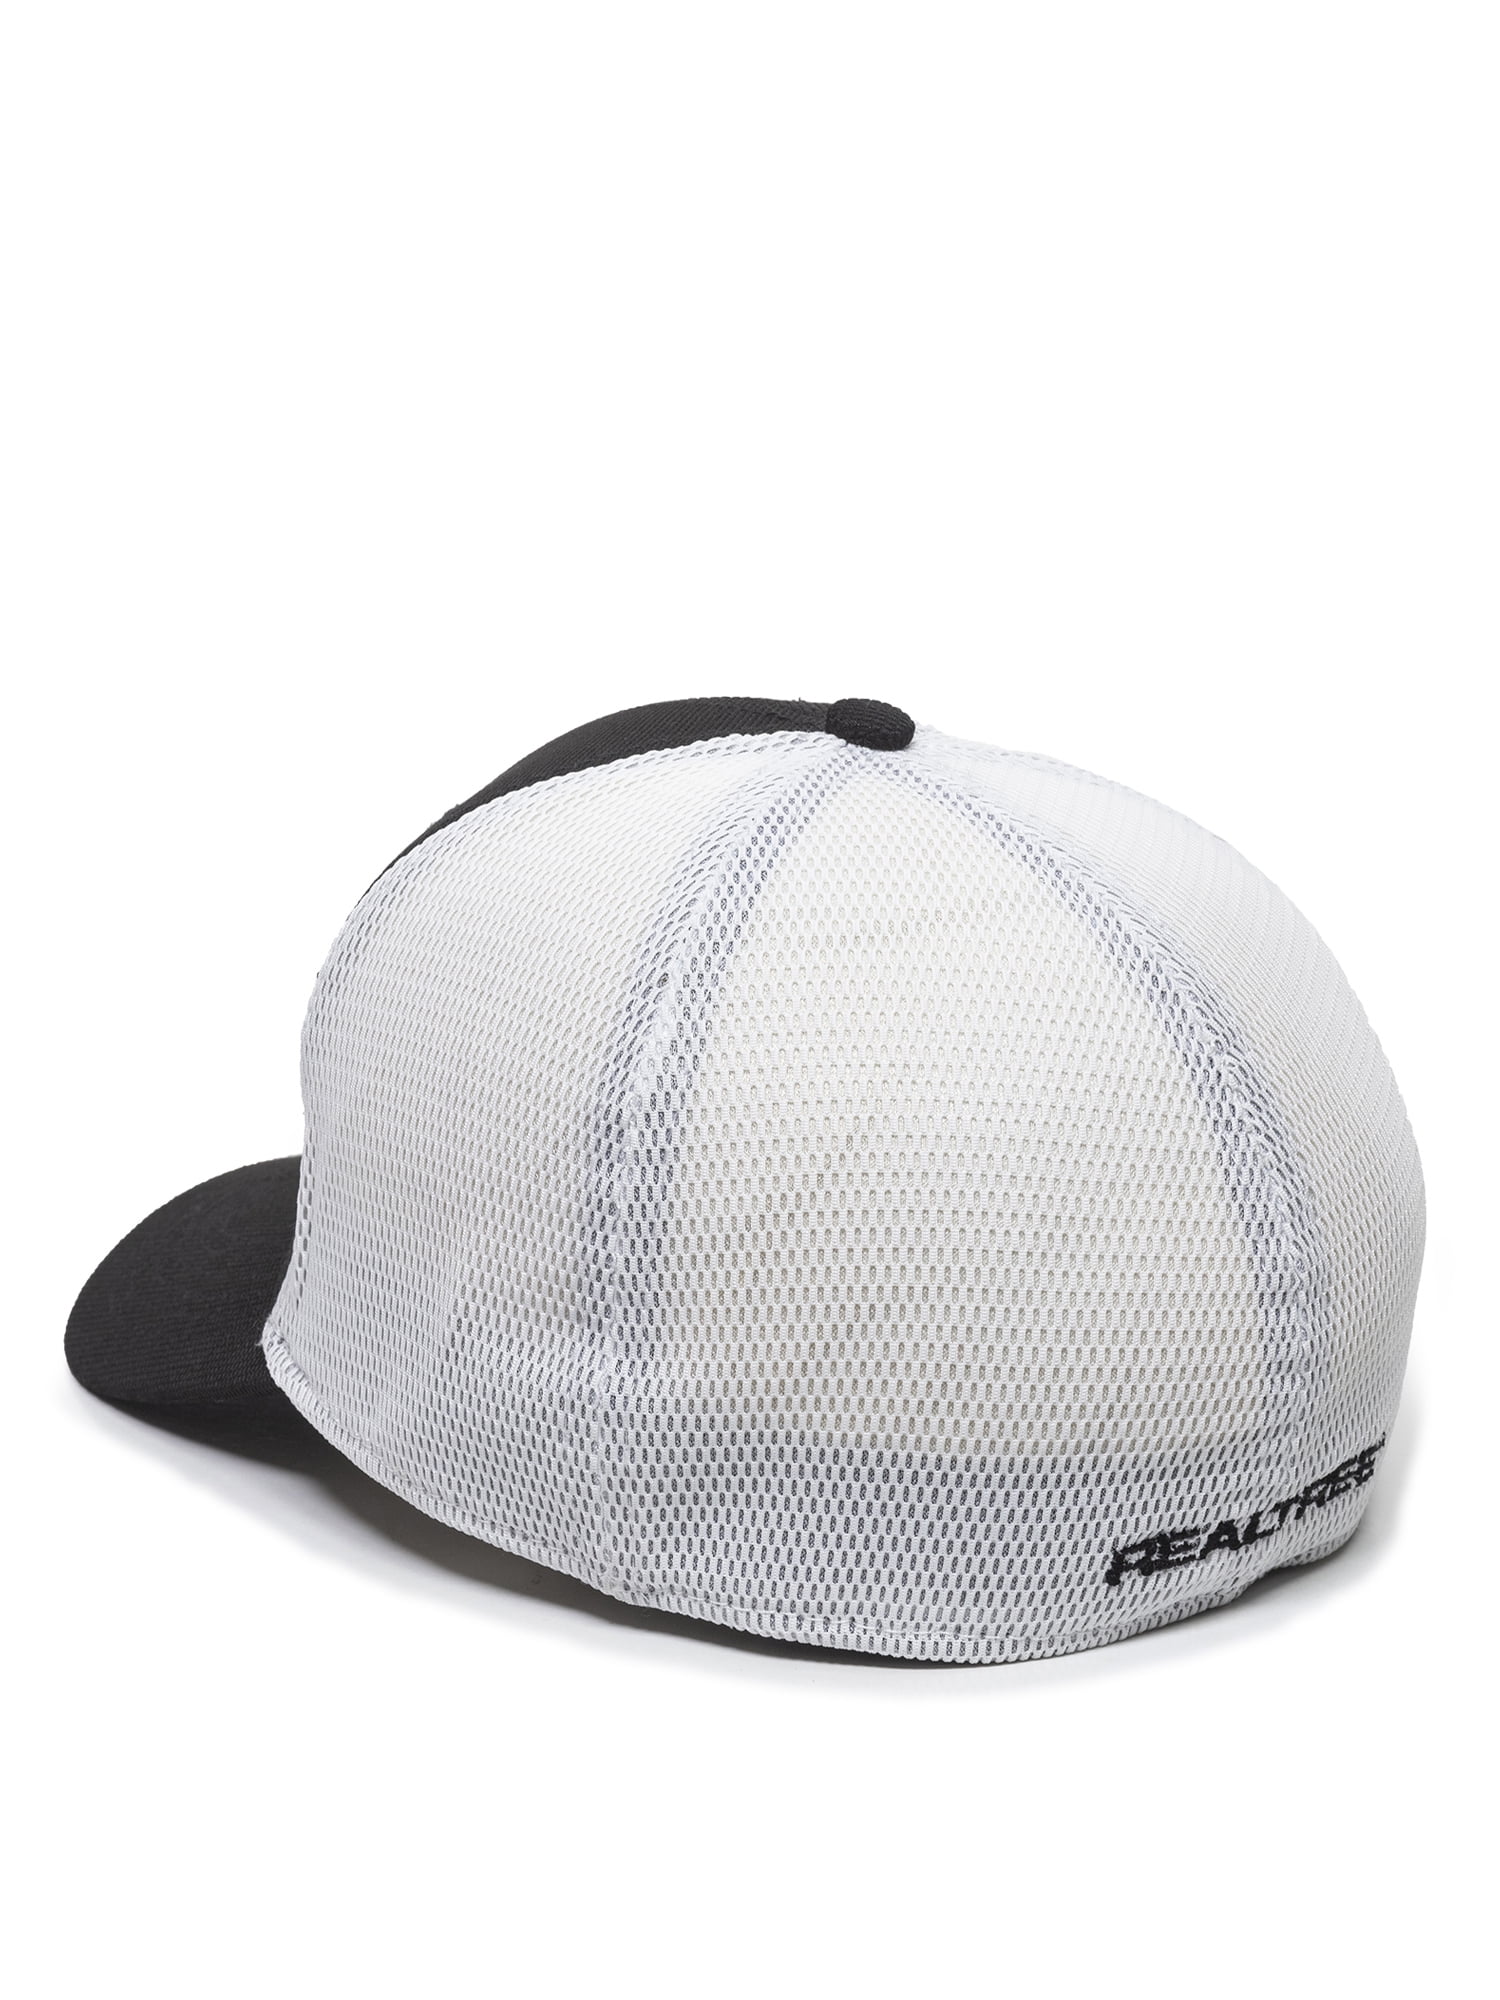 Large Hat, Hunting Style Realtree Black/White, Large/Extra Structured Baseball